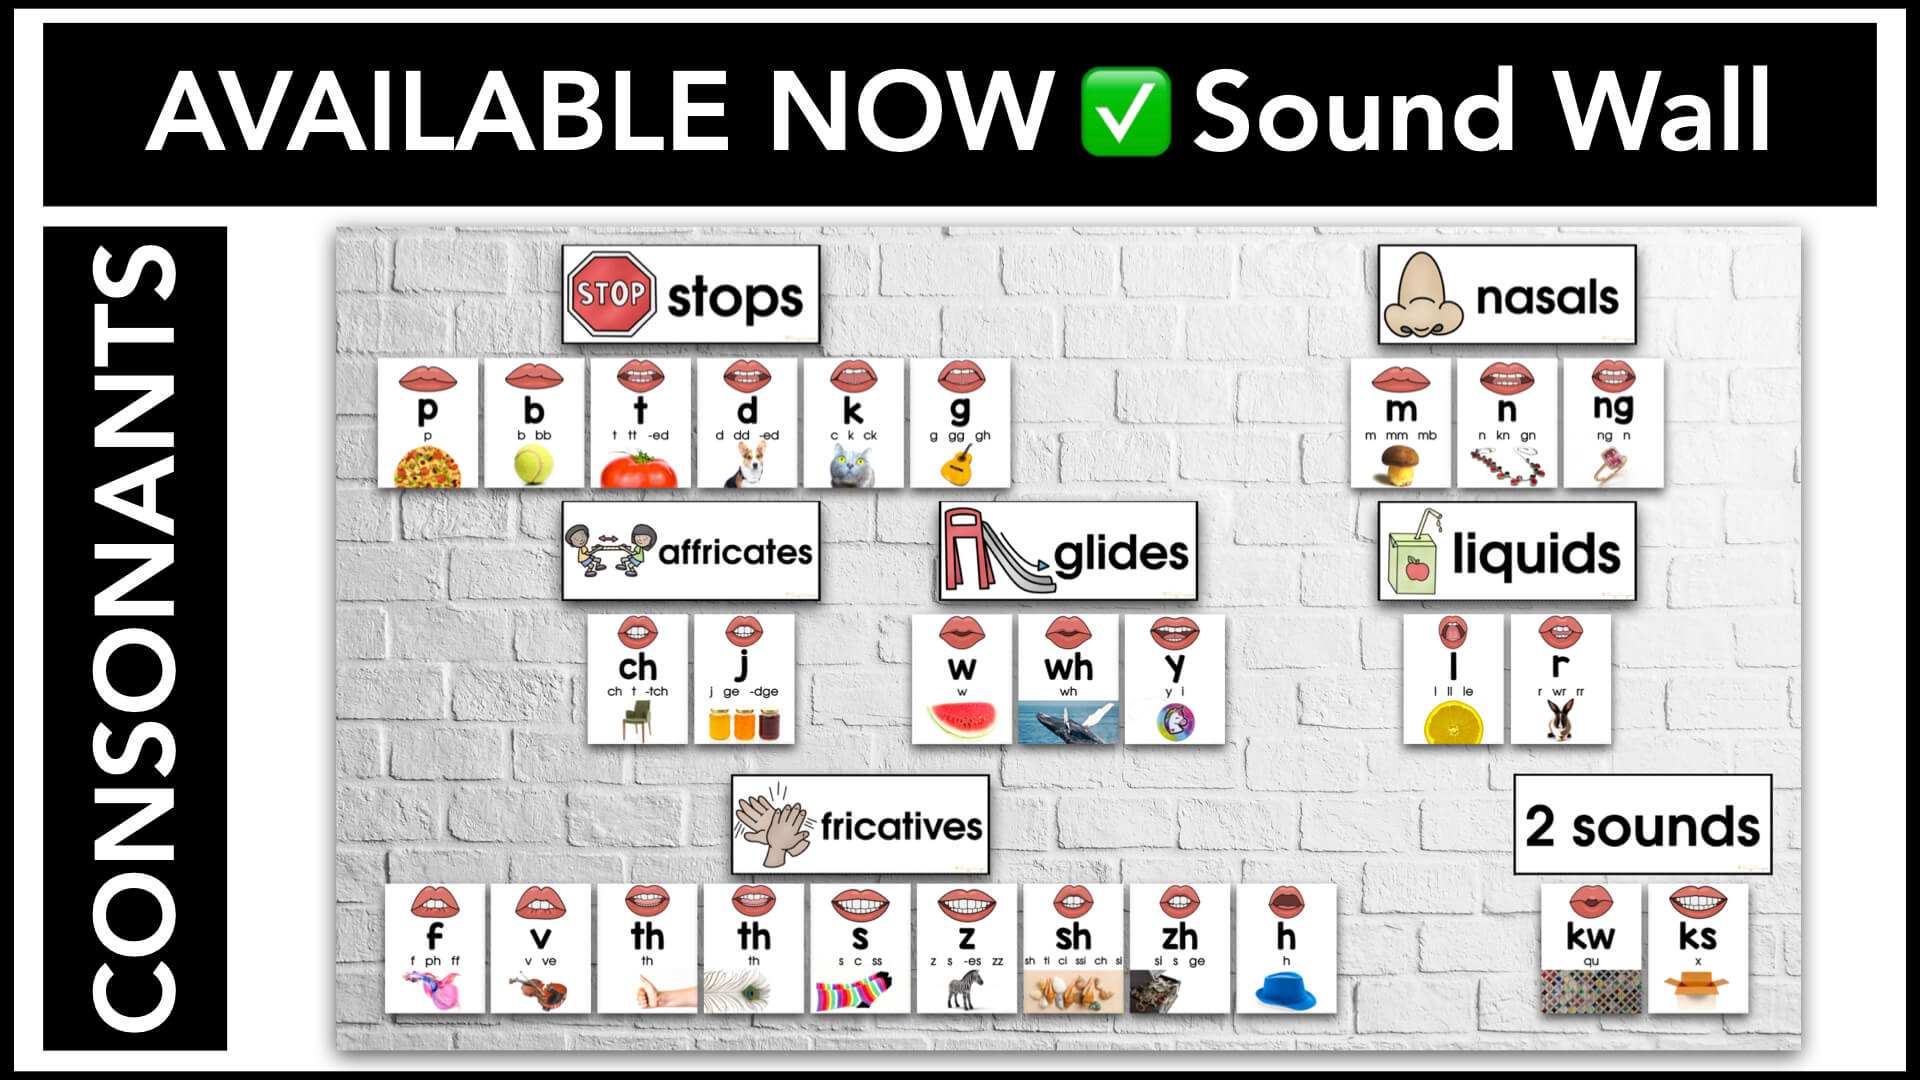 Sound Wall - Consonants variant 2